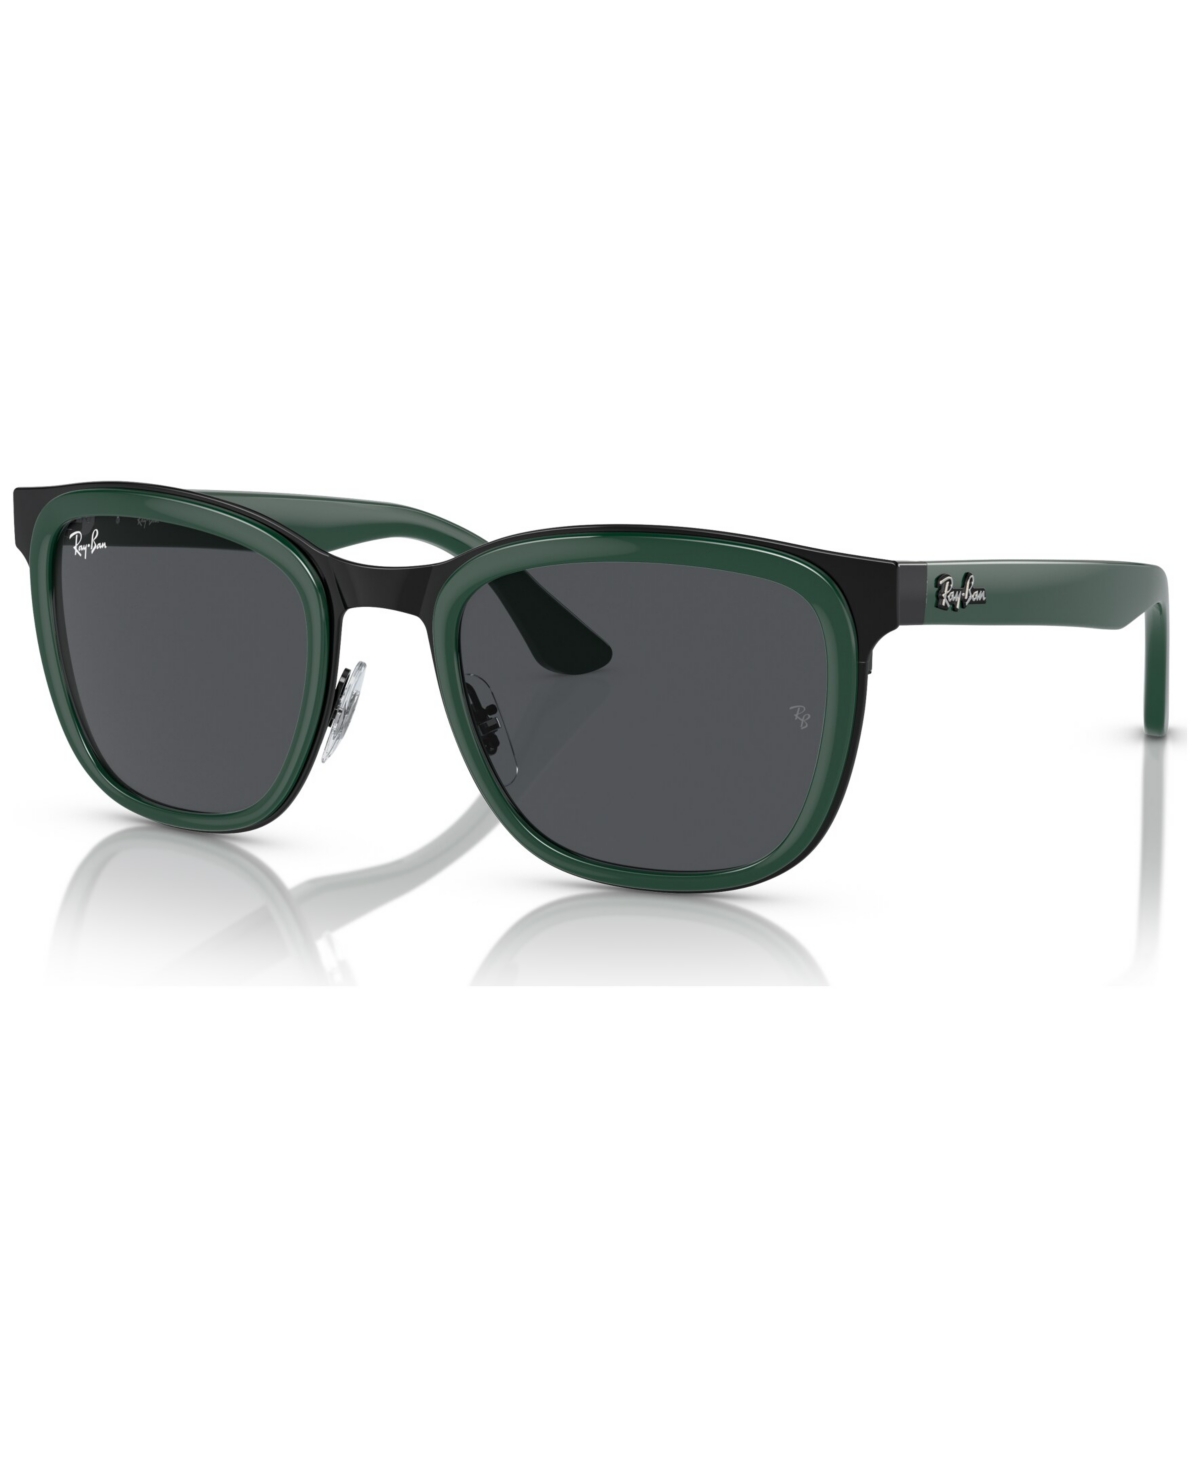 Ray Ban Sunglasses Unisex Clyde - Black Frame Grey Lenses 53-22